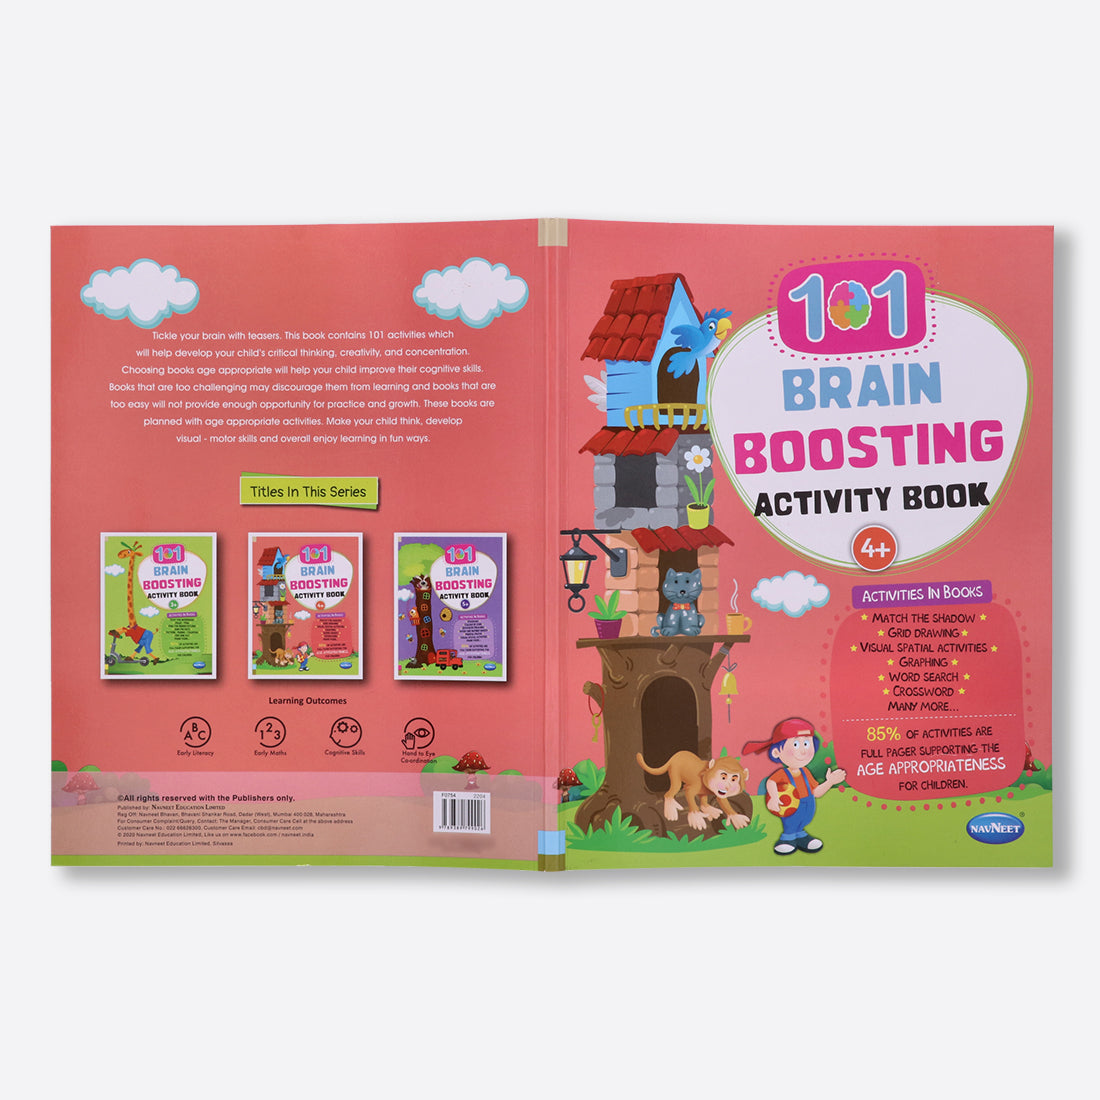 Navneet 101 Brain Boosting Activity Book -Preschool Kids- Age 4+, Logical reasoning, Best Brain teaser book- Fun activities - Word Search, Crosswords, Visual Spatial, Maze & more